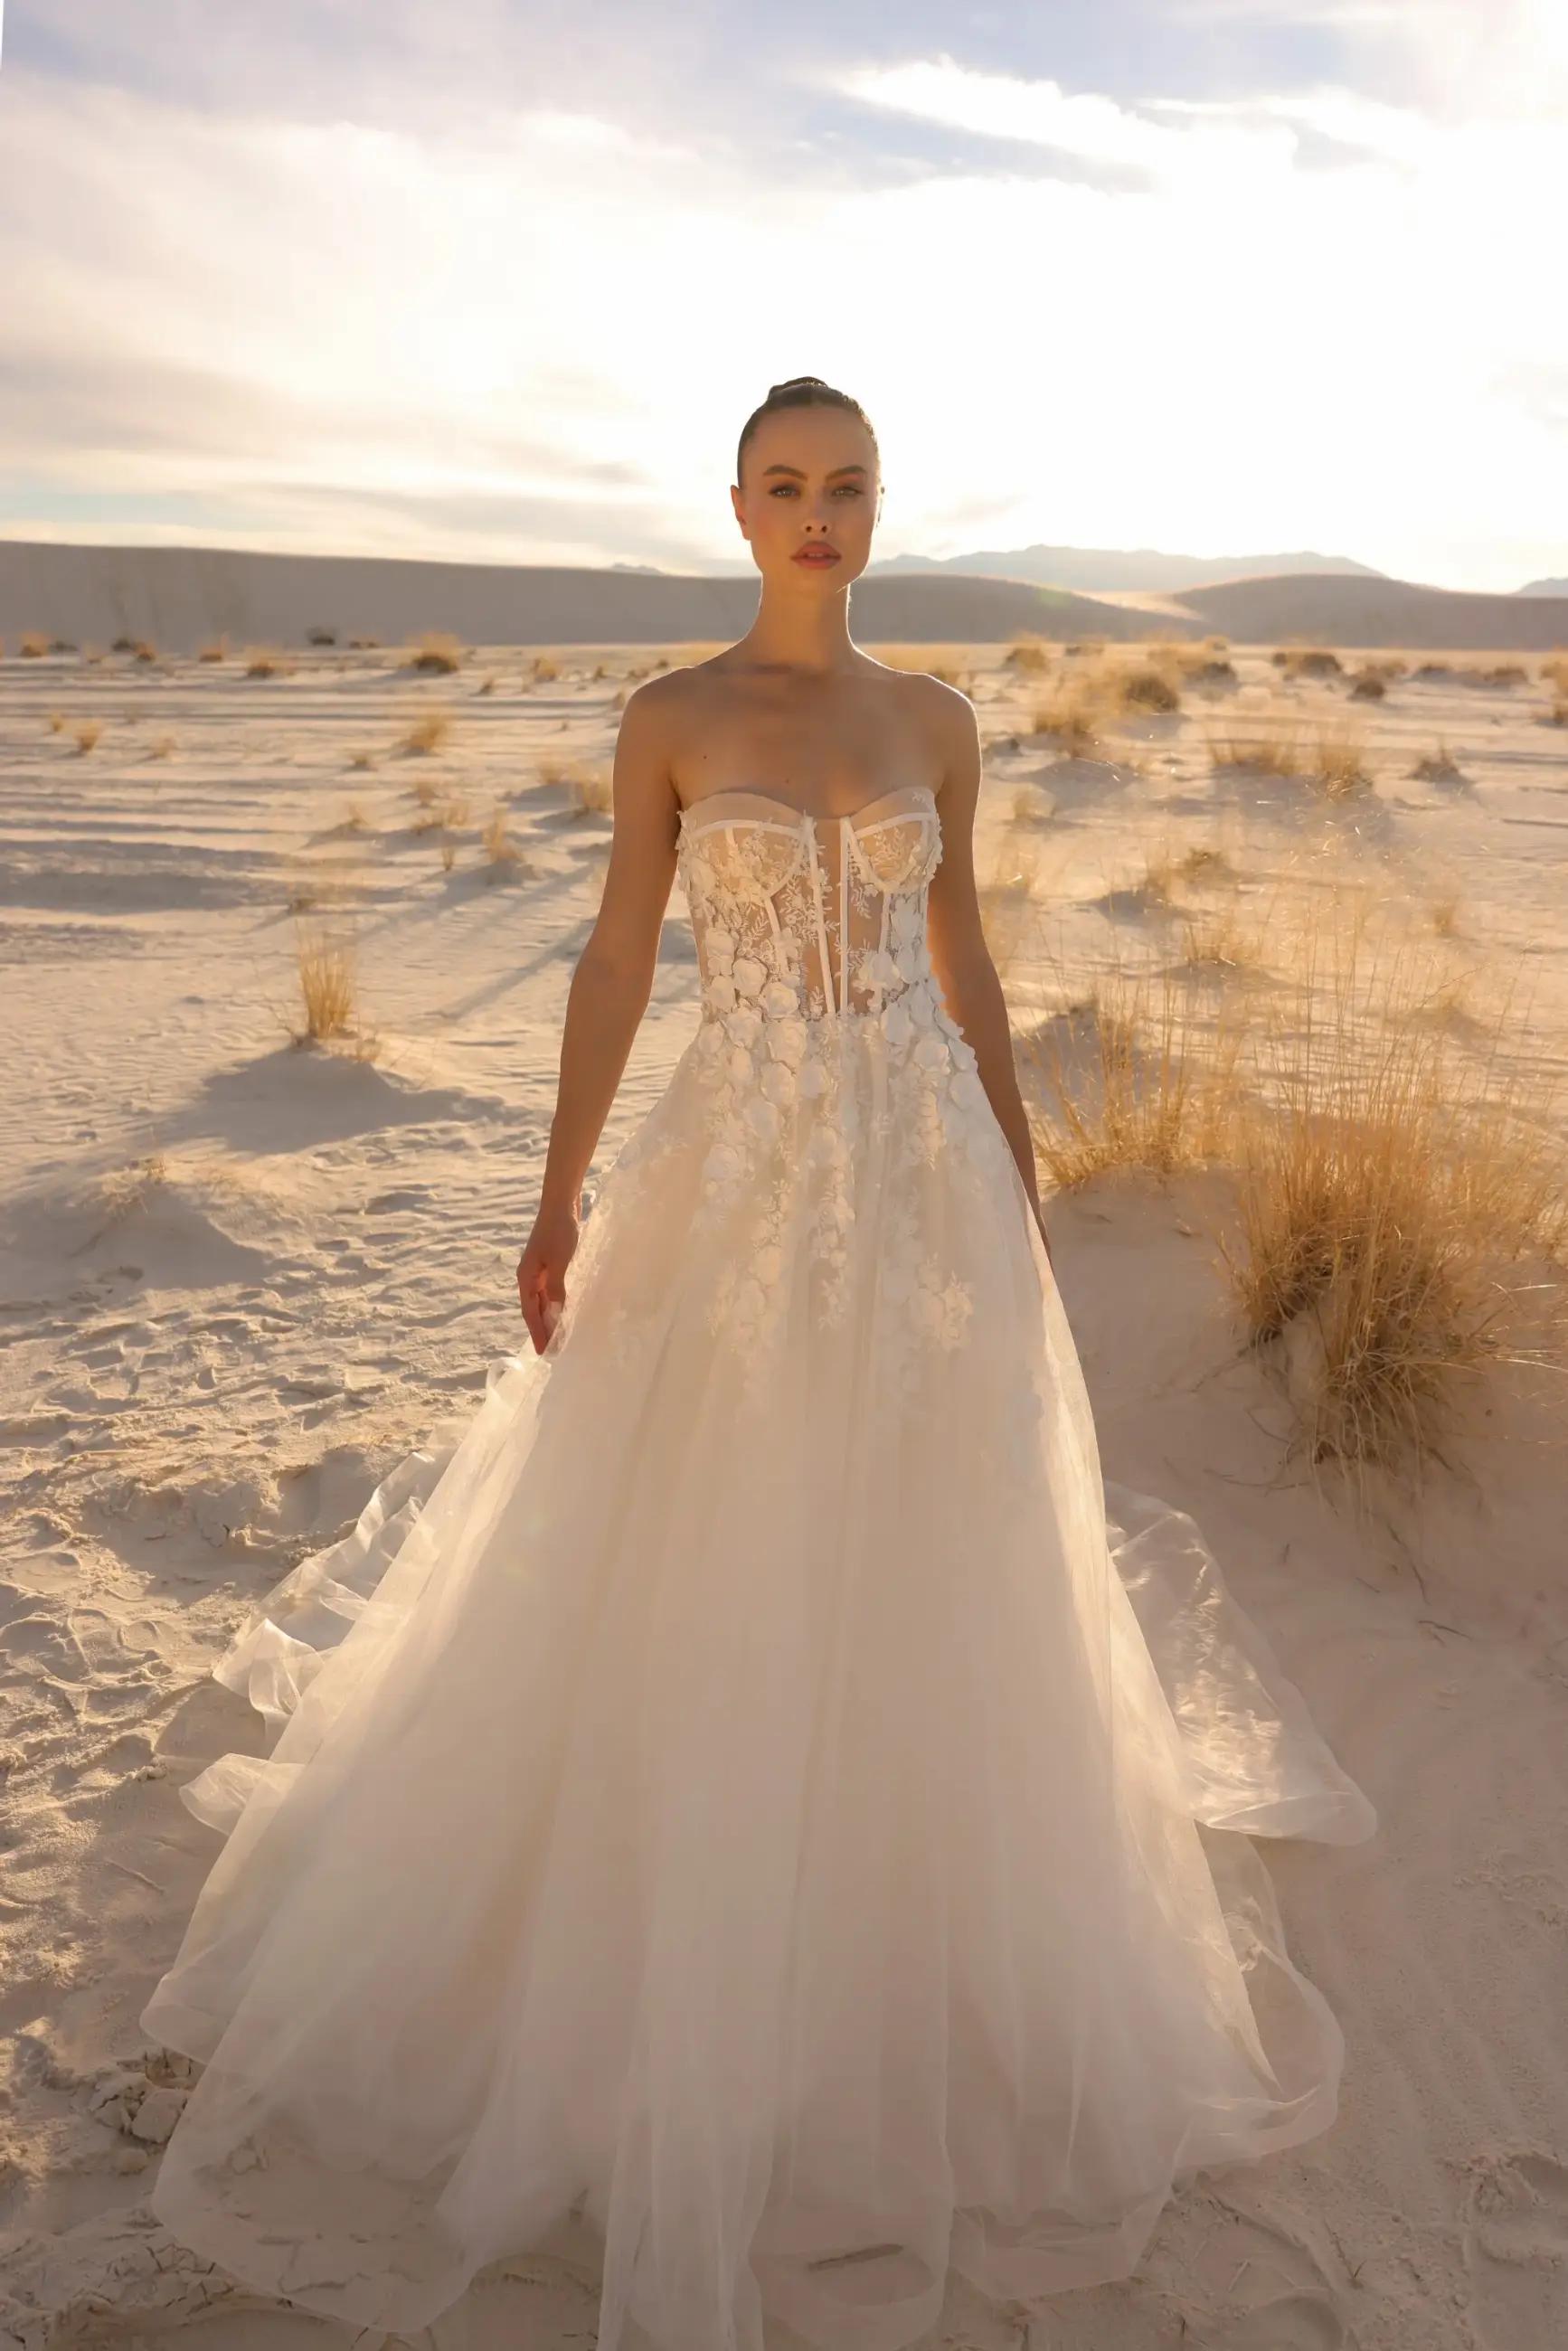 Whimsical Chic: Incorporating Boho Elements into Your Wedding Dress Style Image #1